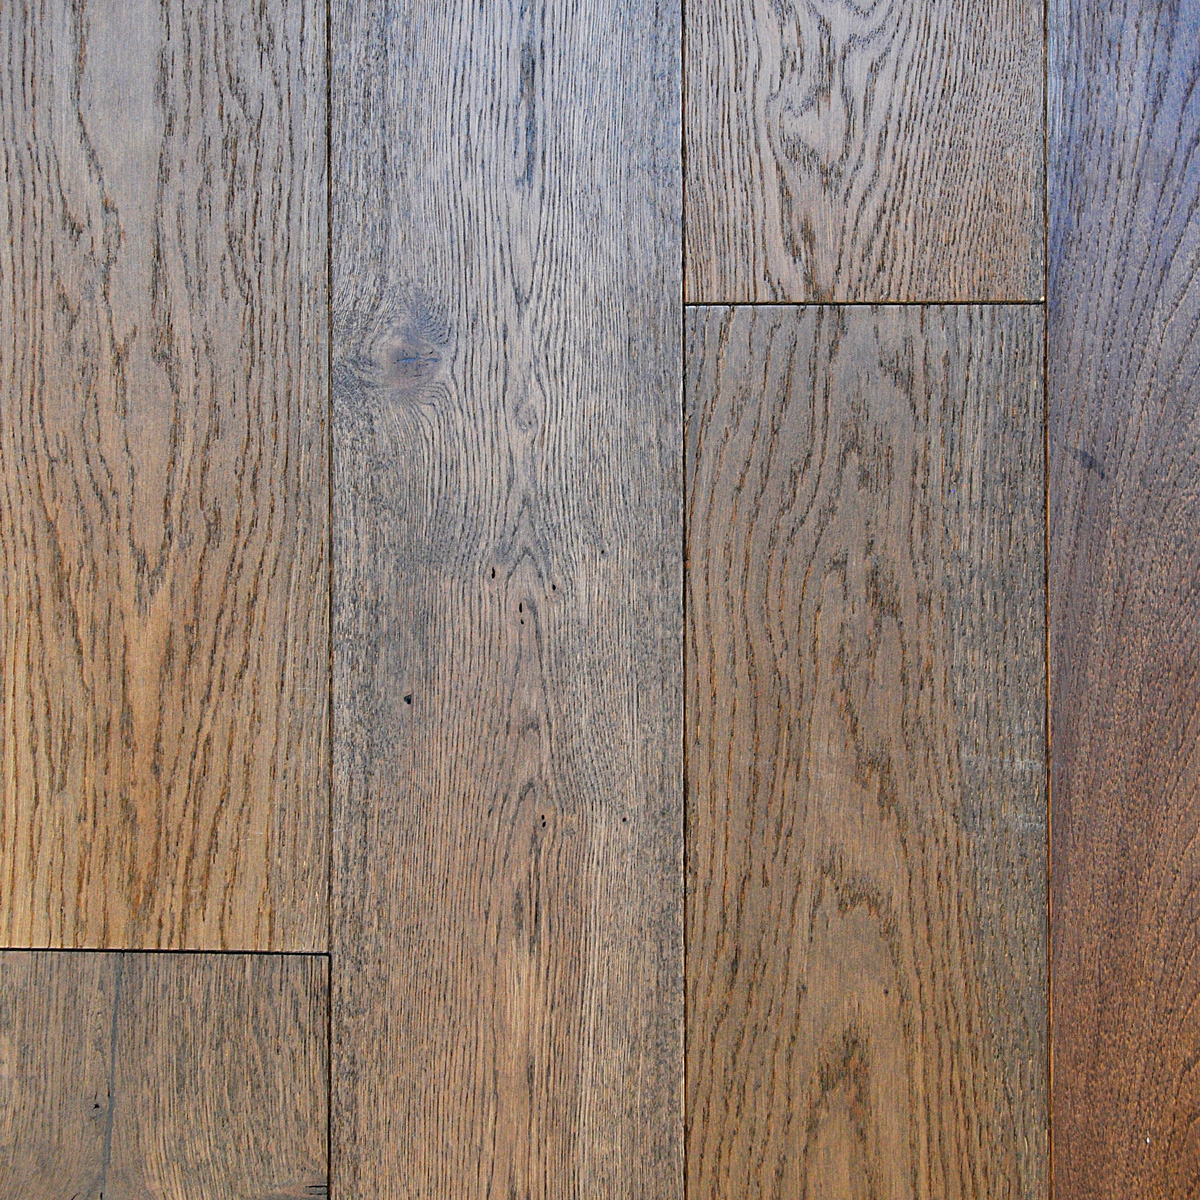 Hardwood Flooring European White Oak, 6 Hardwood Flooring